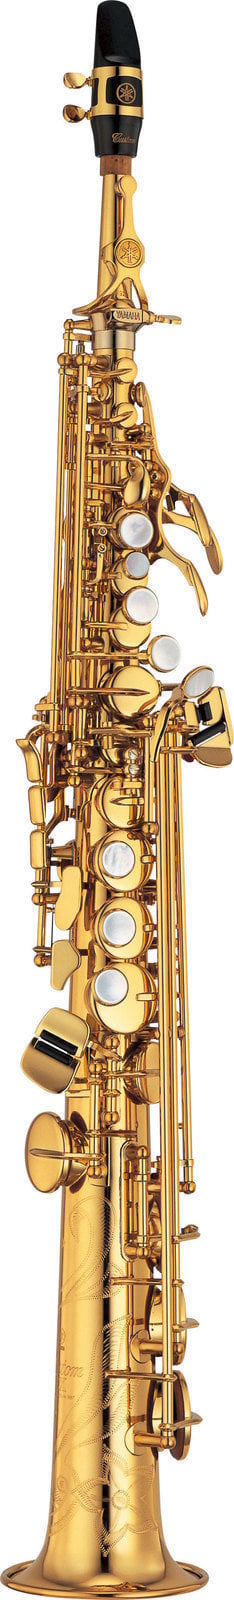 Soprano saxophone Yamaha YSS-875EXGP 02 Soprano saxophone